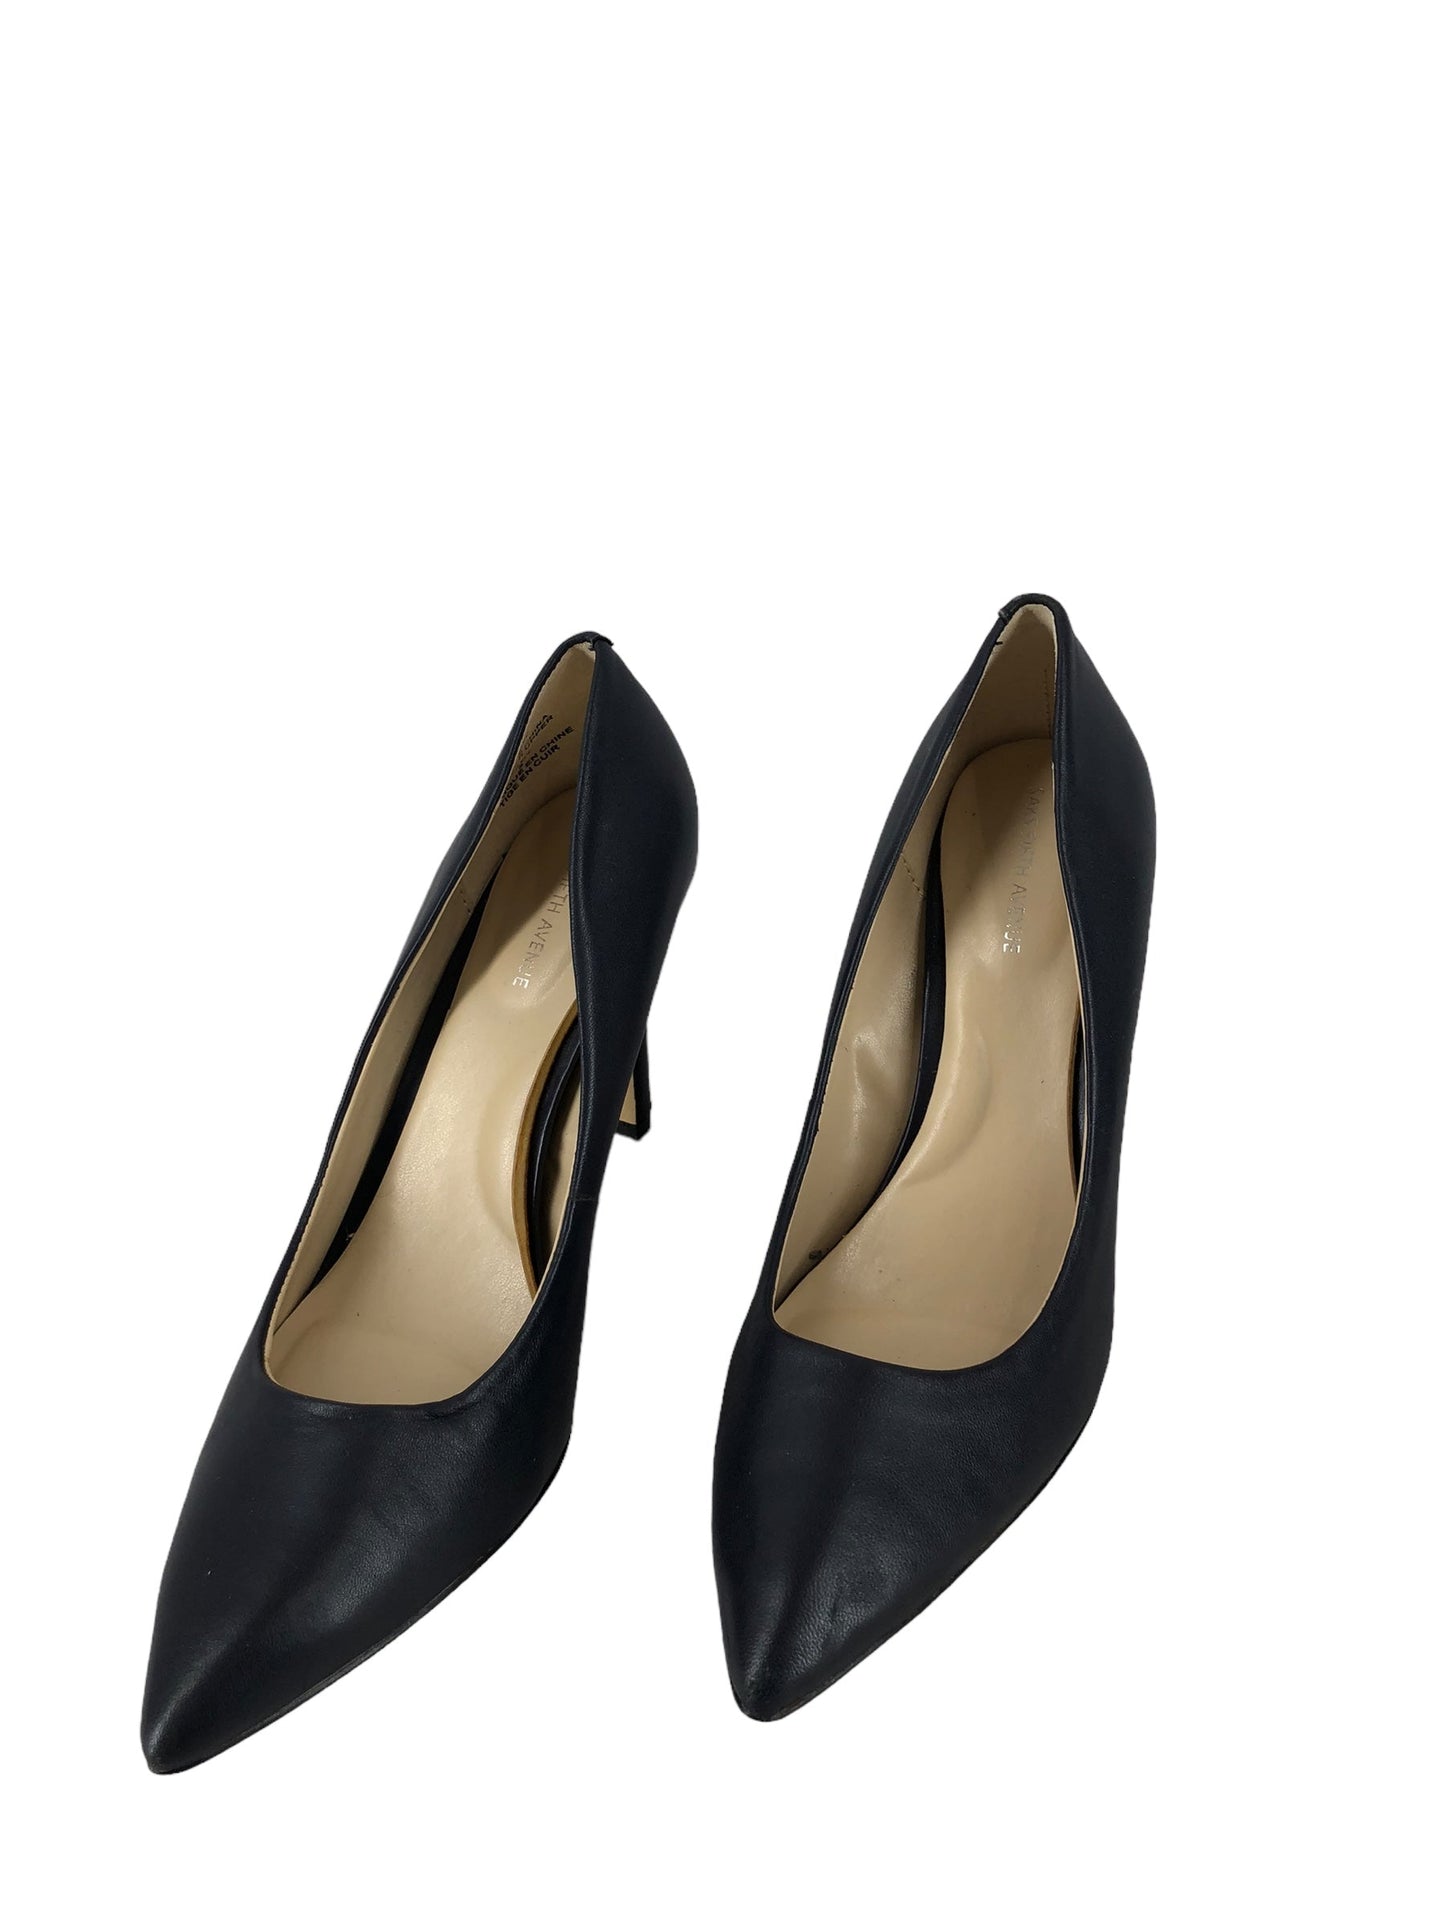 Navy Shoes Heels Stiletto Saks Fifth Avenue, Size 6